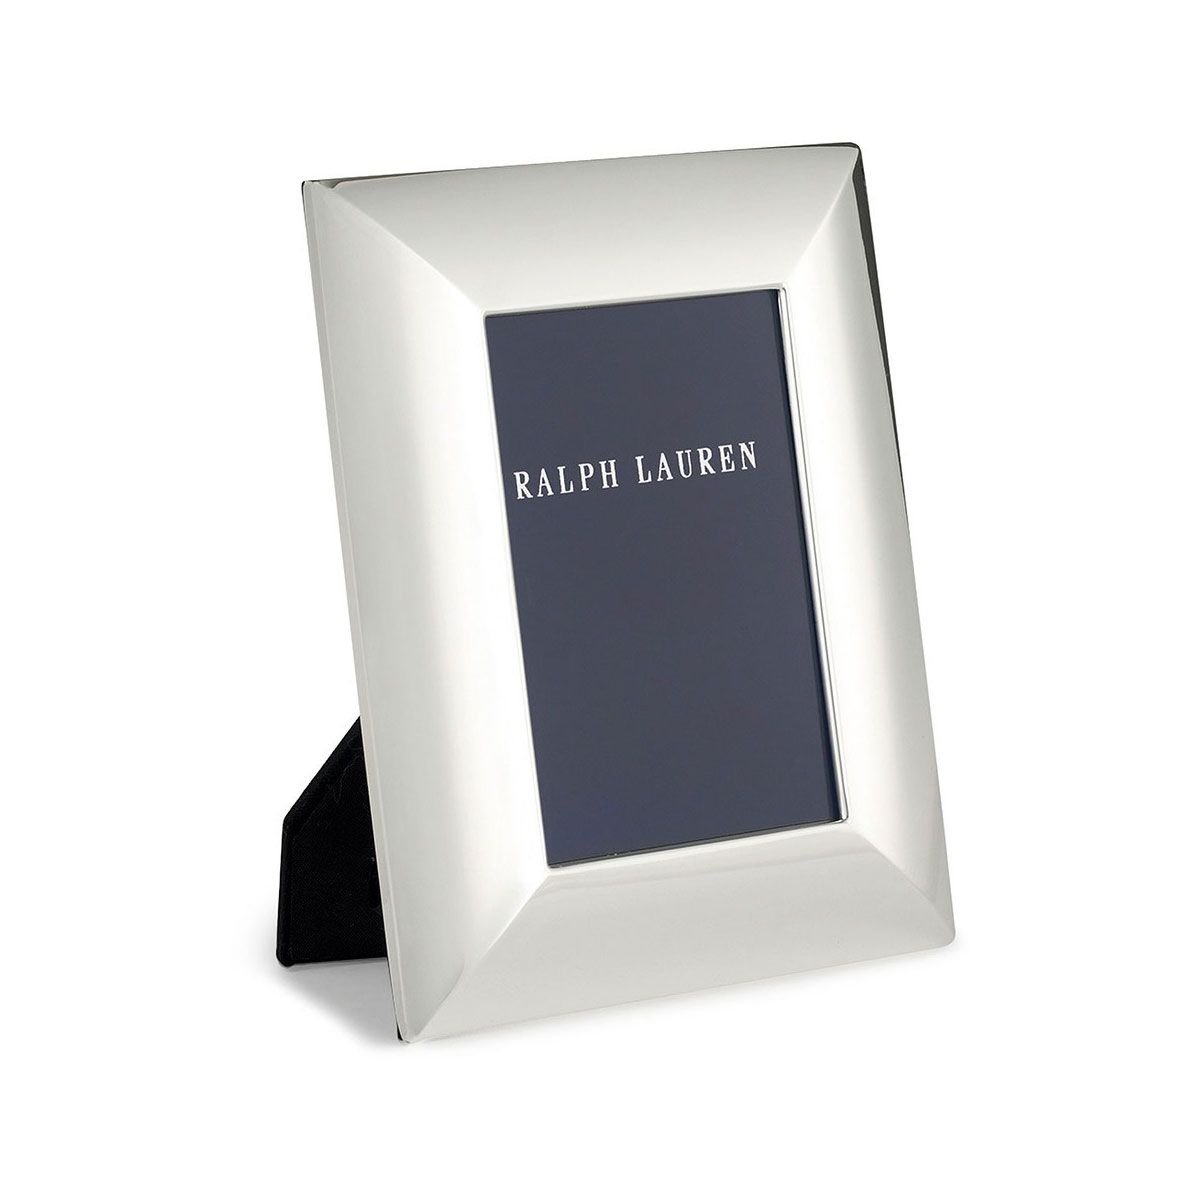 Ralph Lauren Beckbury 4x6" Picture Frame, Silver